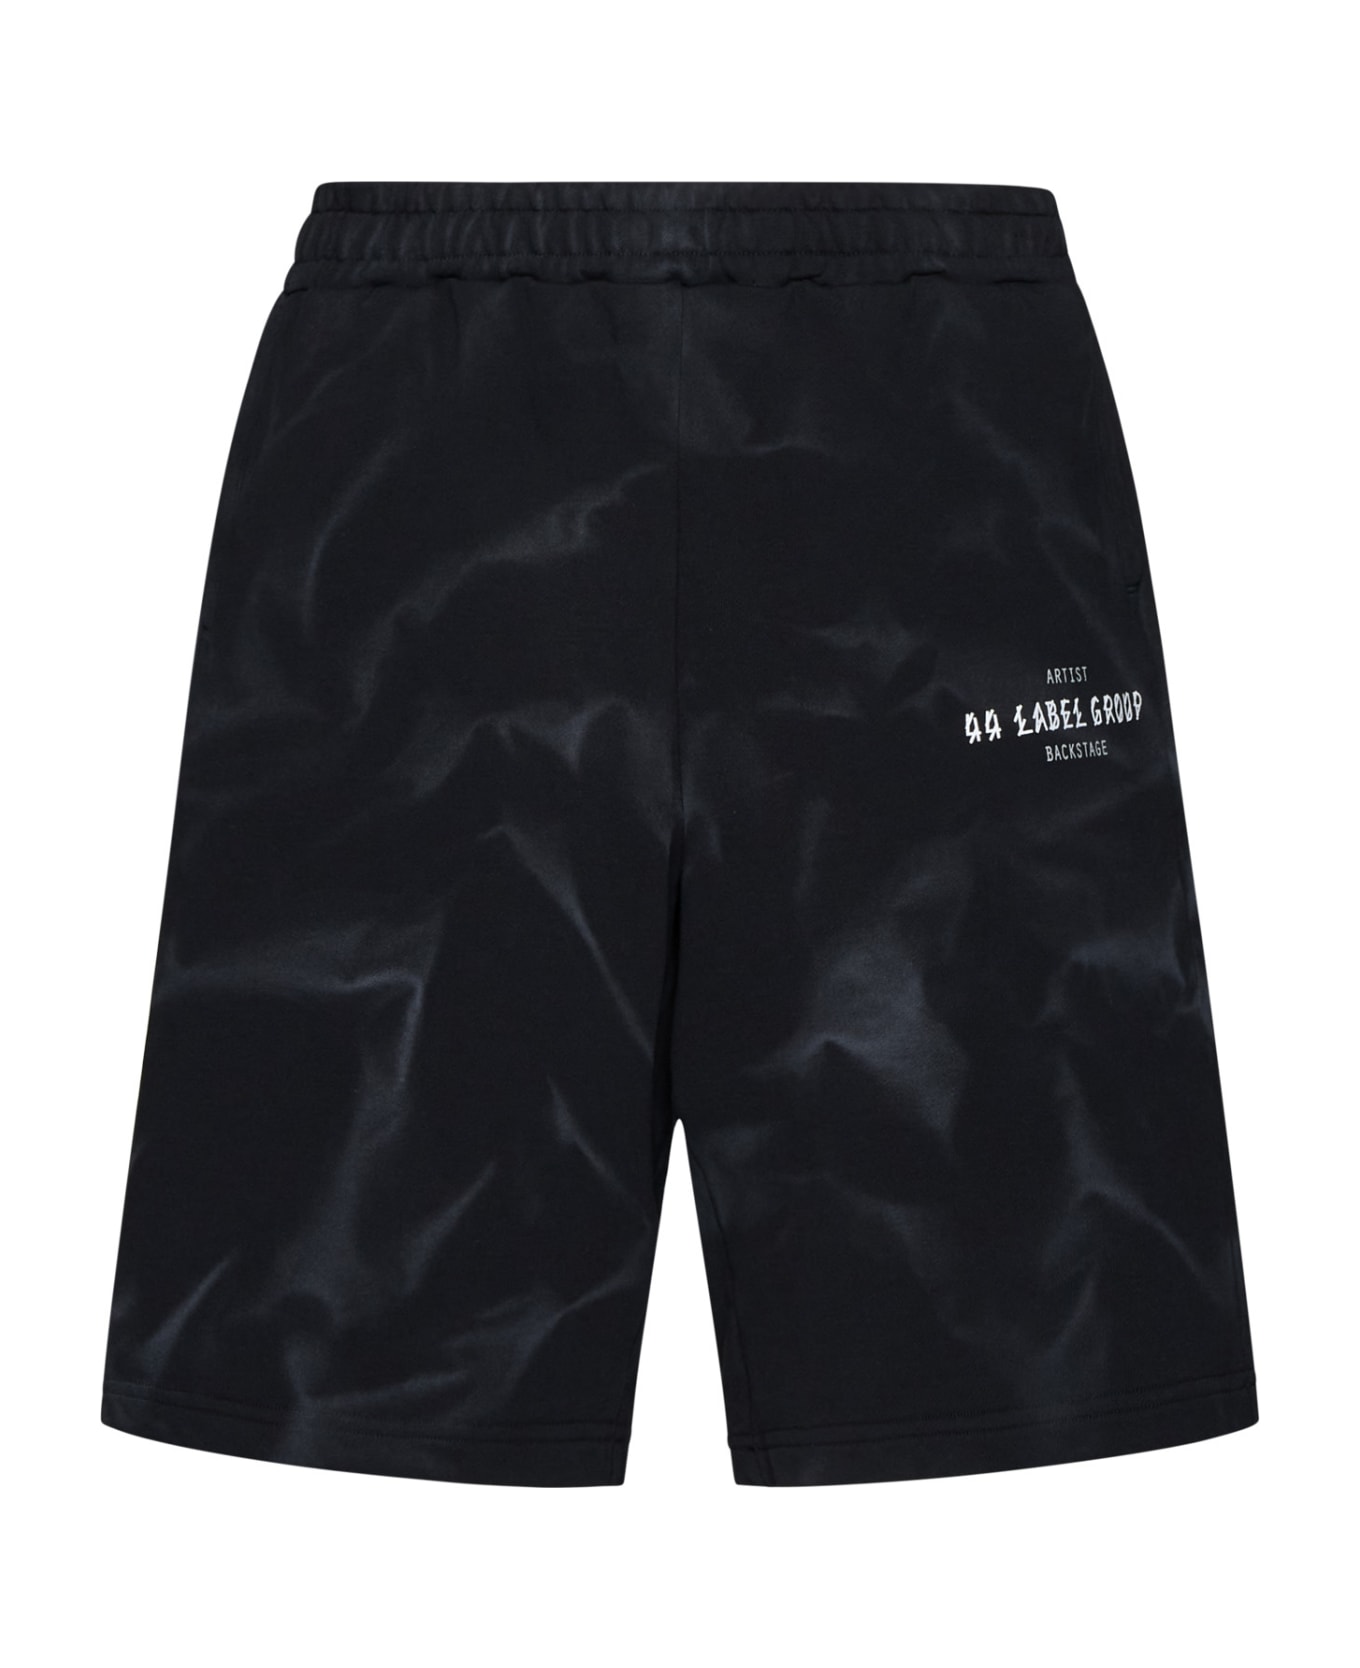 44 Label Group Shorts - Black+effetto smoke